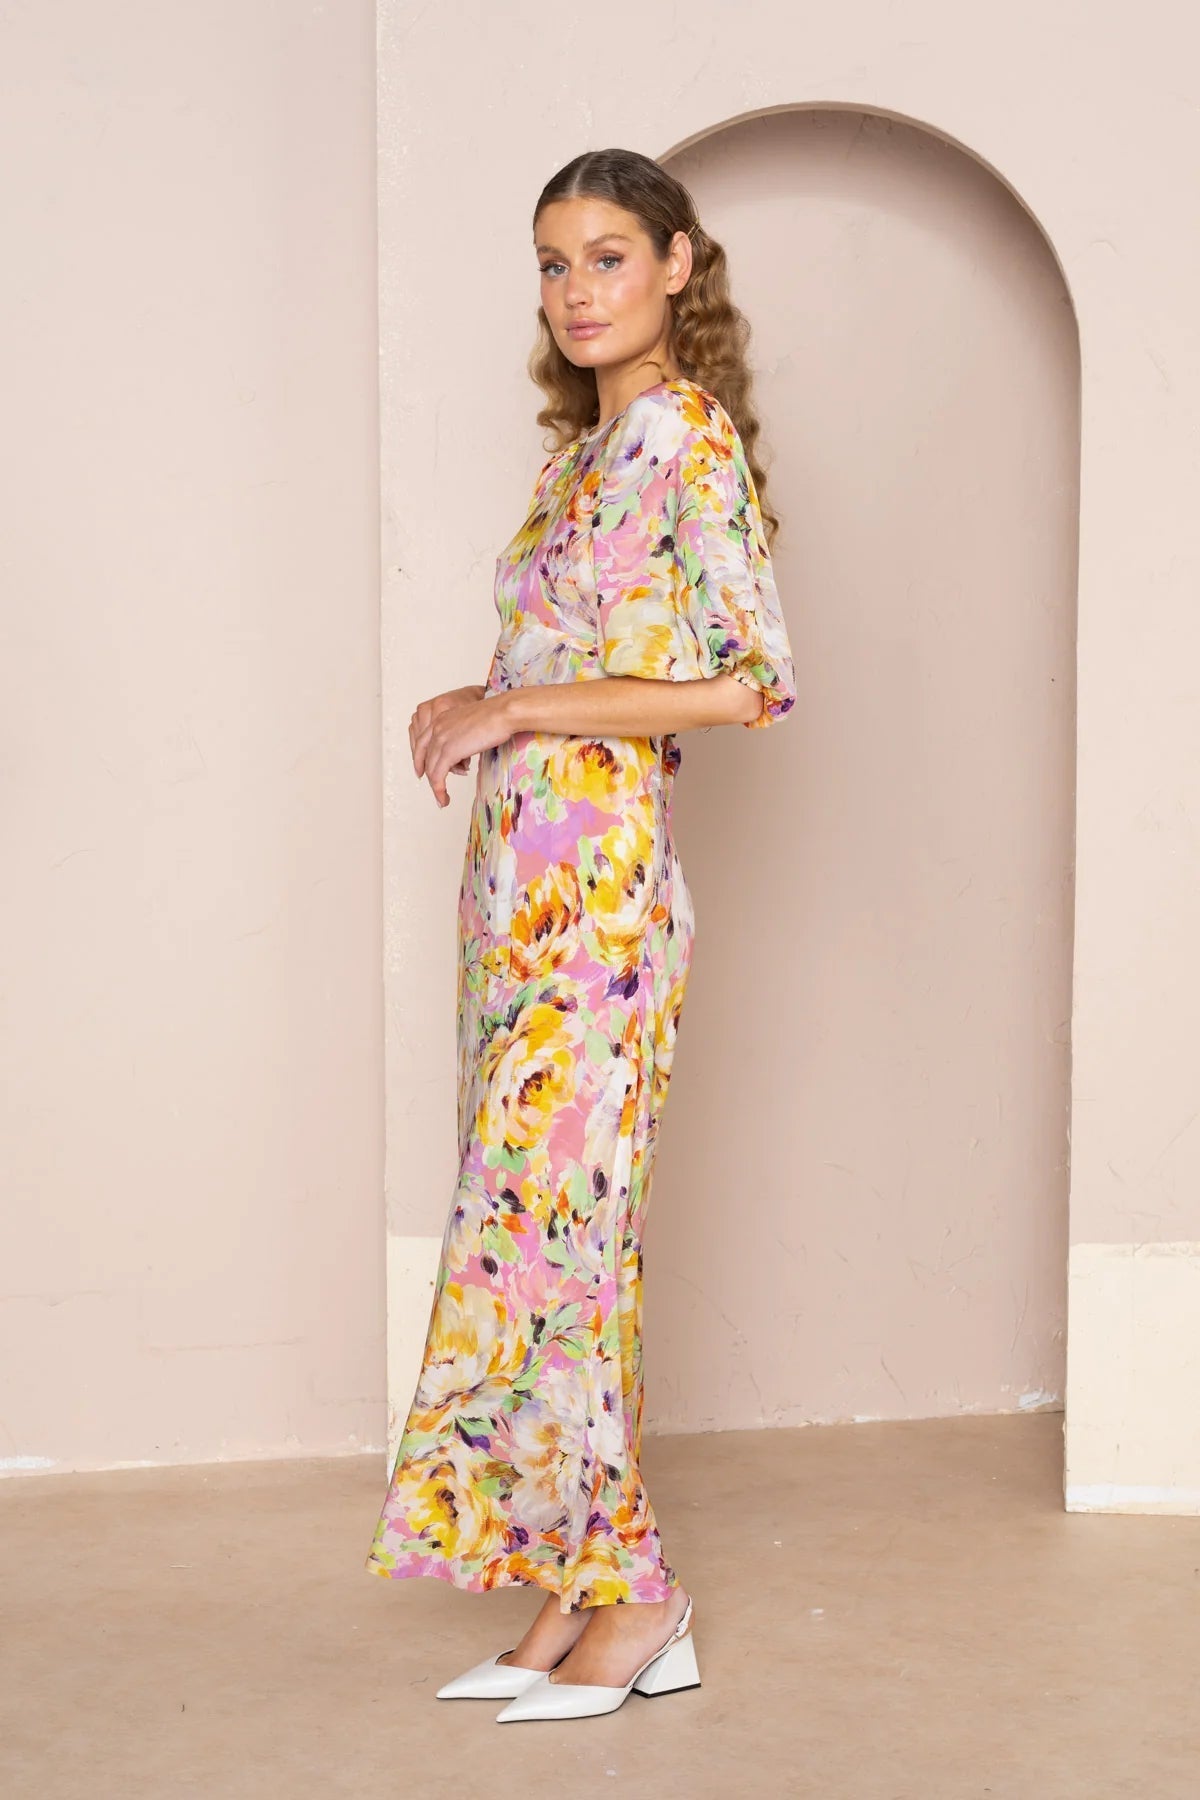 Kachel Roxanne Dress - Pinkhill, Darwin boutique, Australian high end fashion, Darwin Fashion